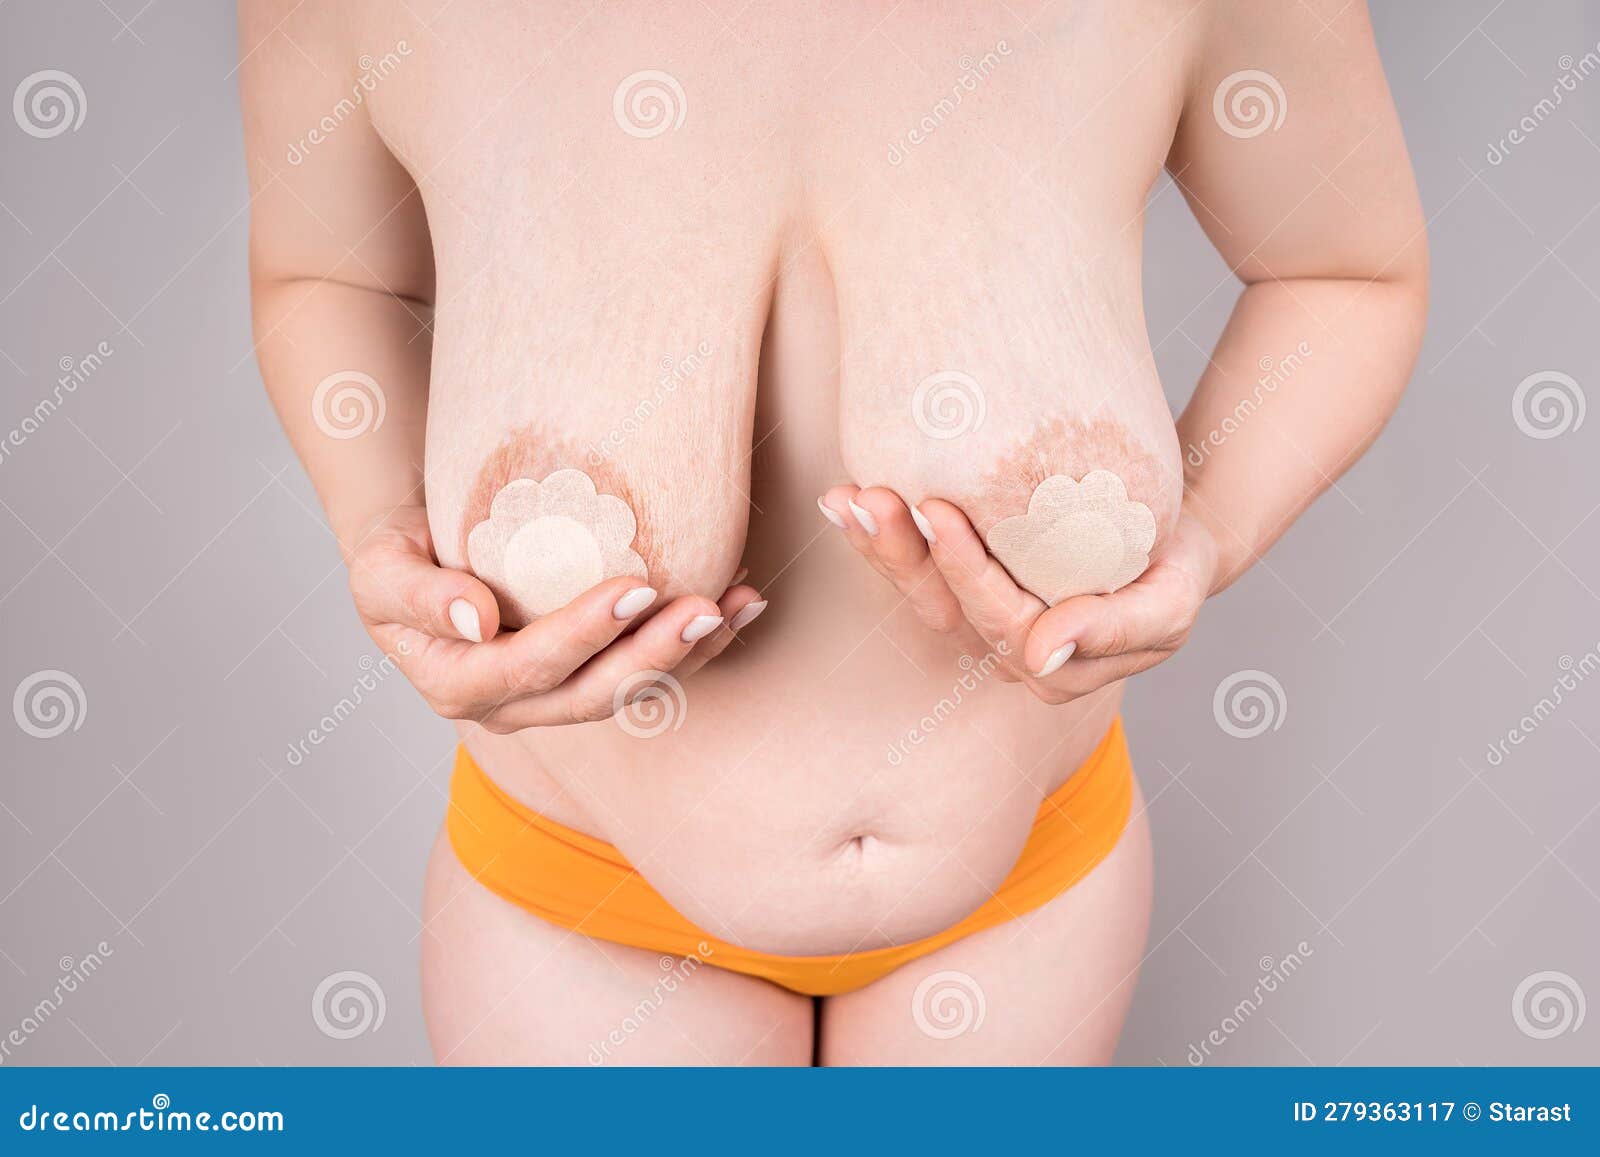 anca coman add photo large nipple images